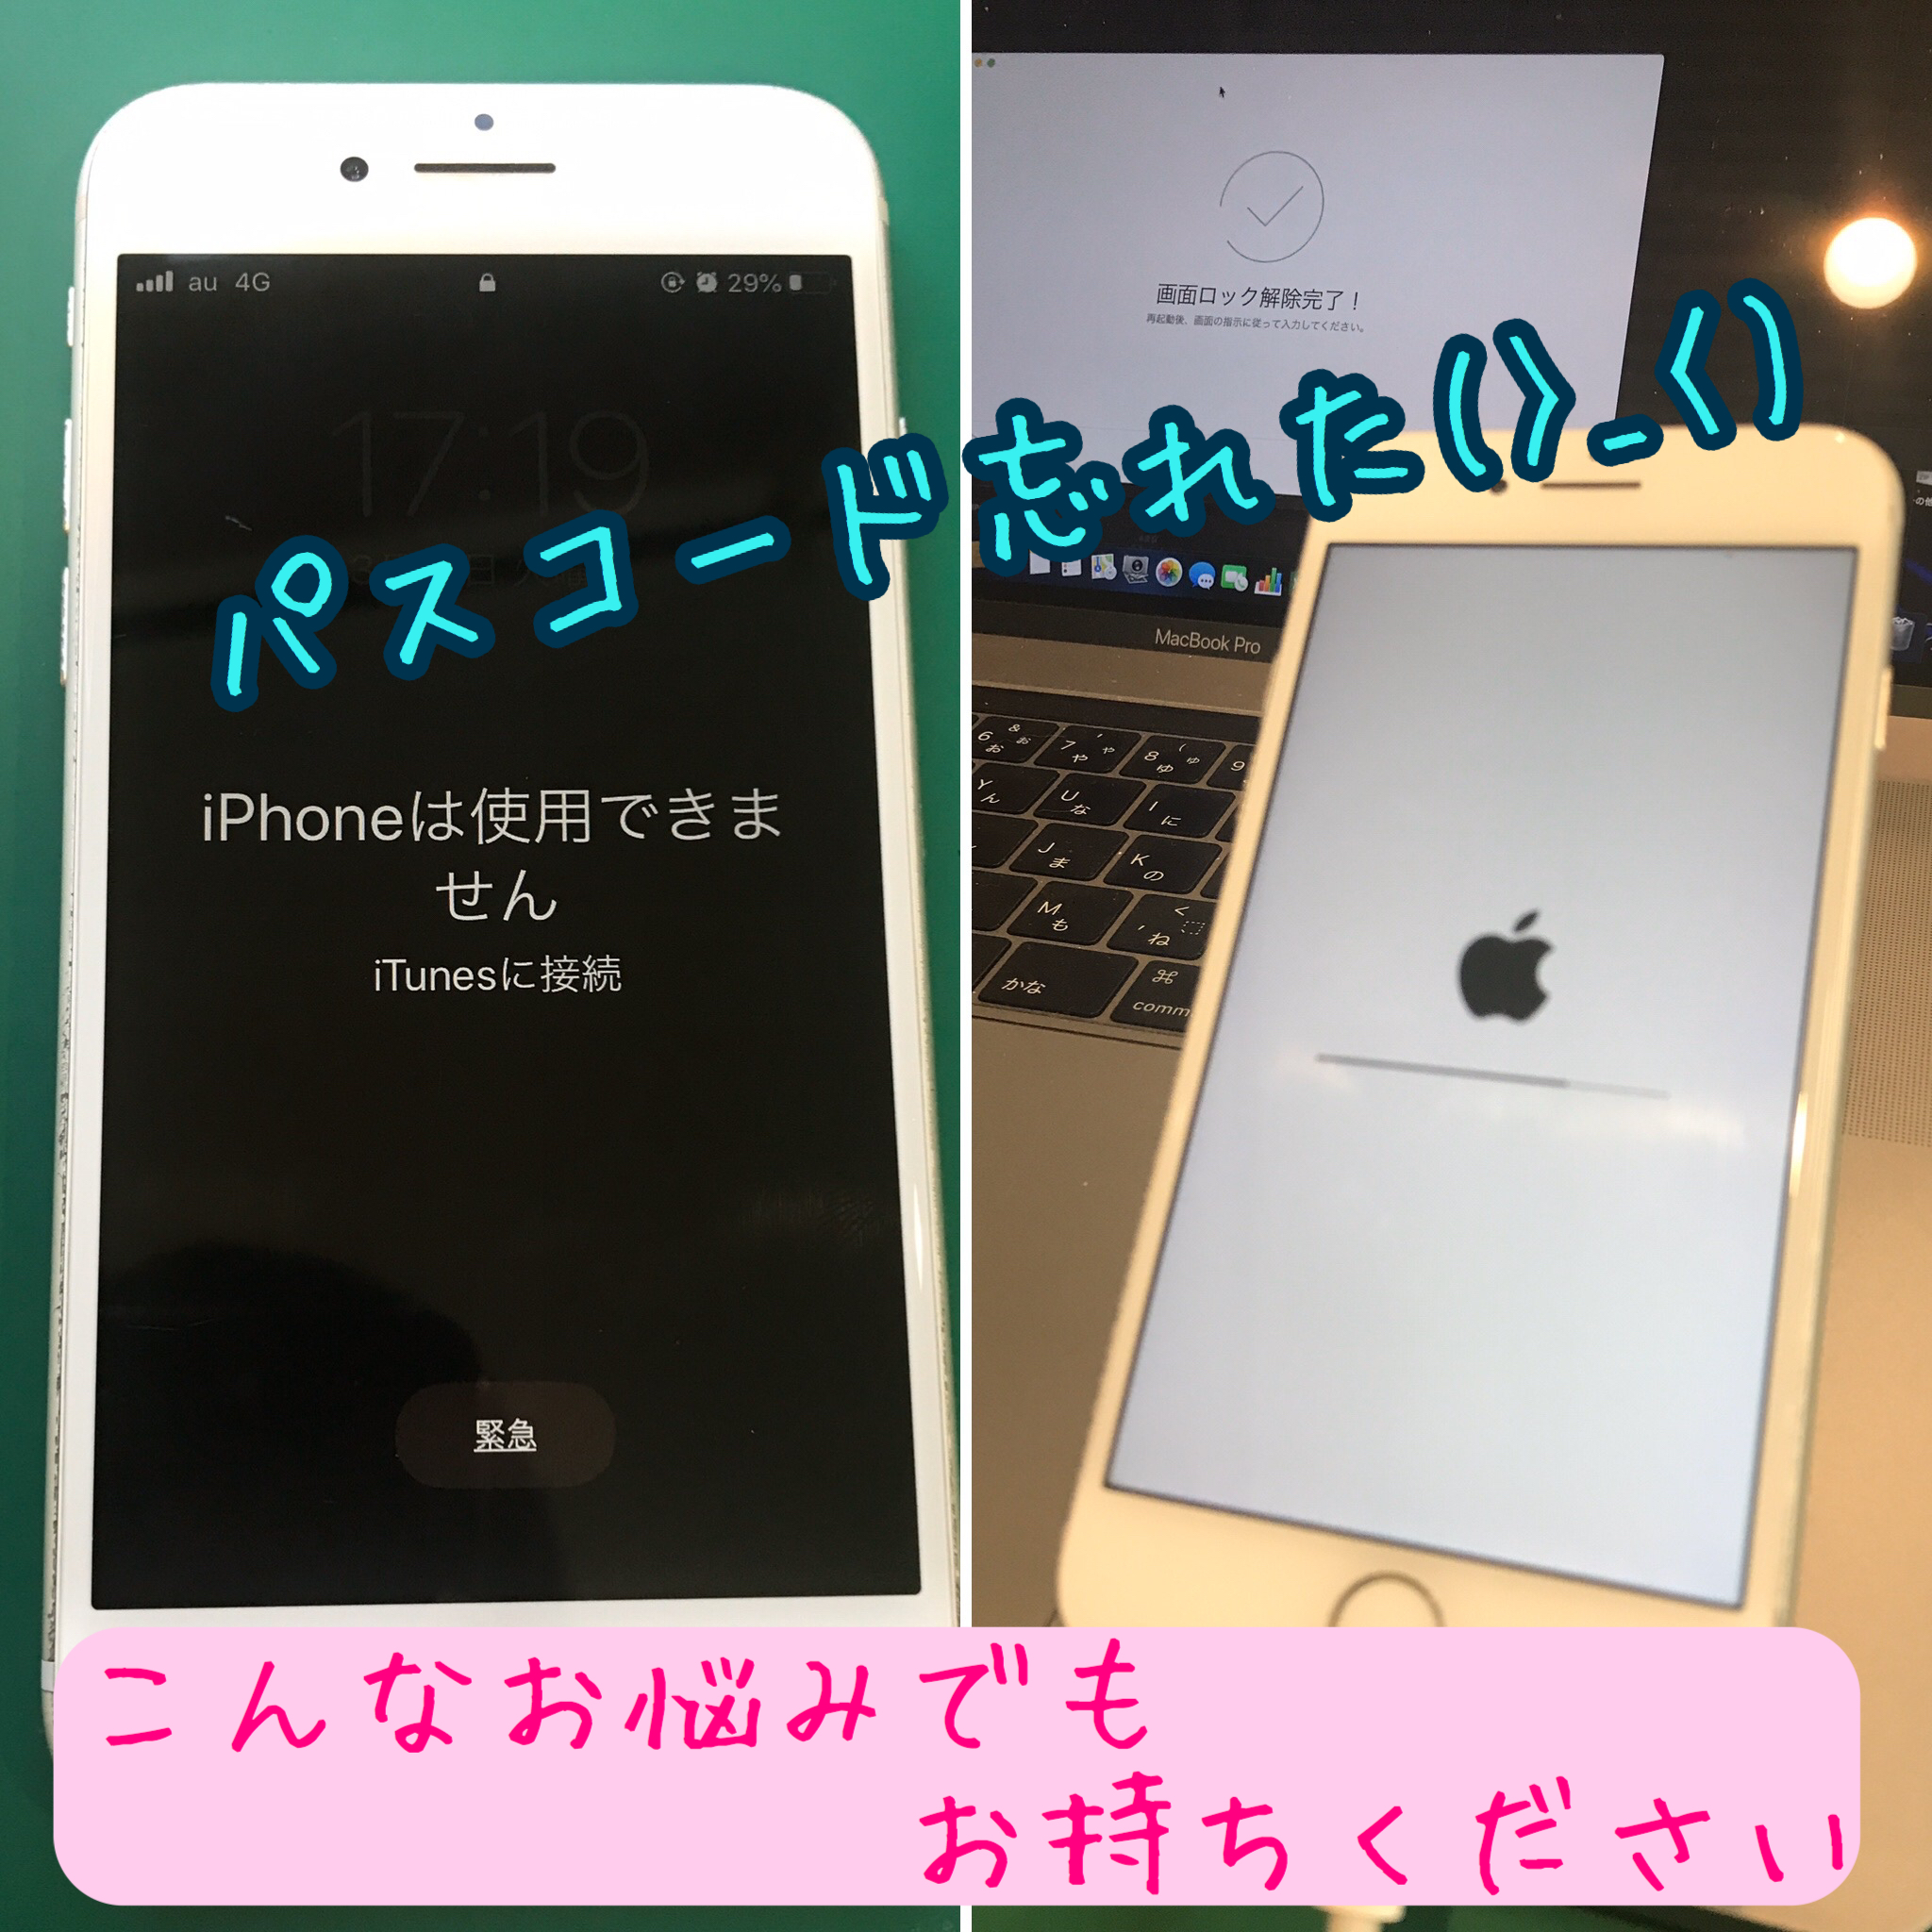 Iphoneは使用できません パスコード忘れのロック解除 Iphone修理 Switch修理 Iふぉん太郎 鎌ヶ谷駅前店